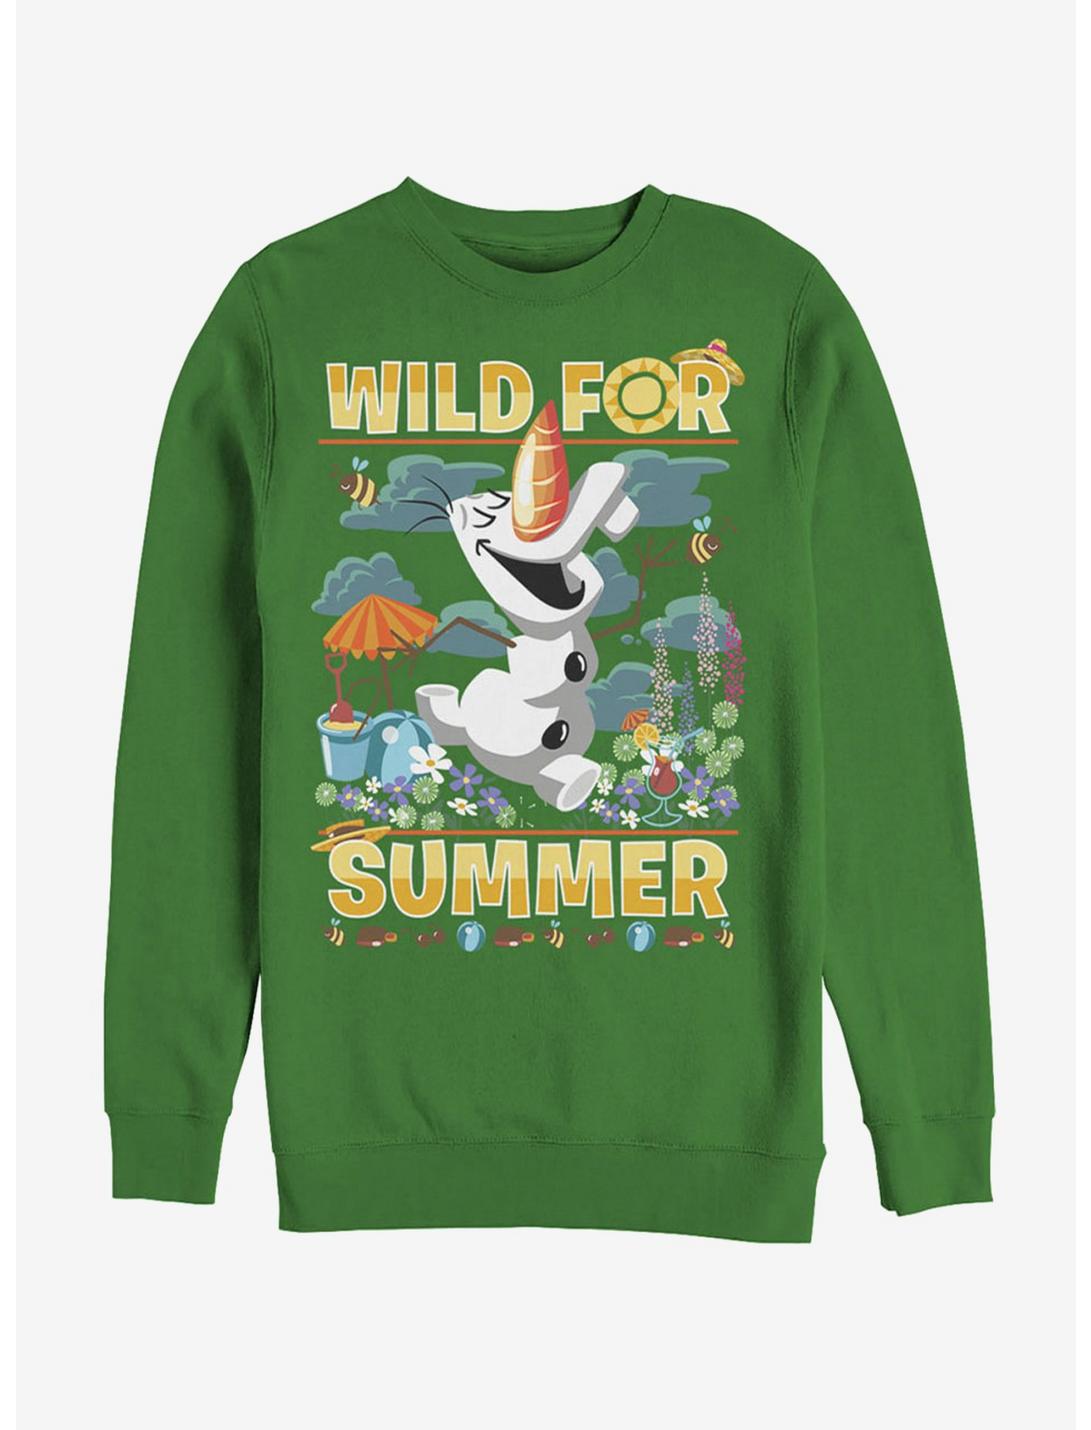 Frozen Olaf Wild for Summer Sweatshirt, KELLY, hi-res